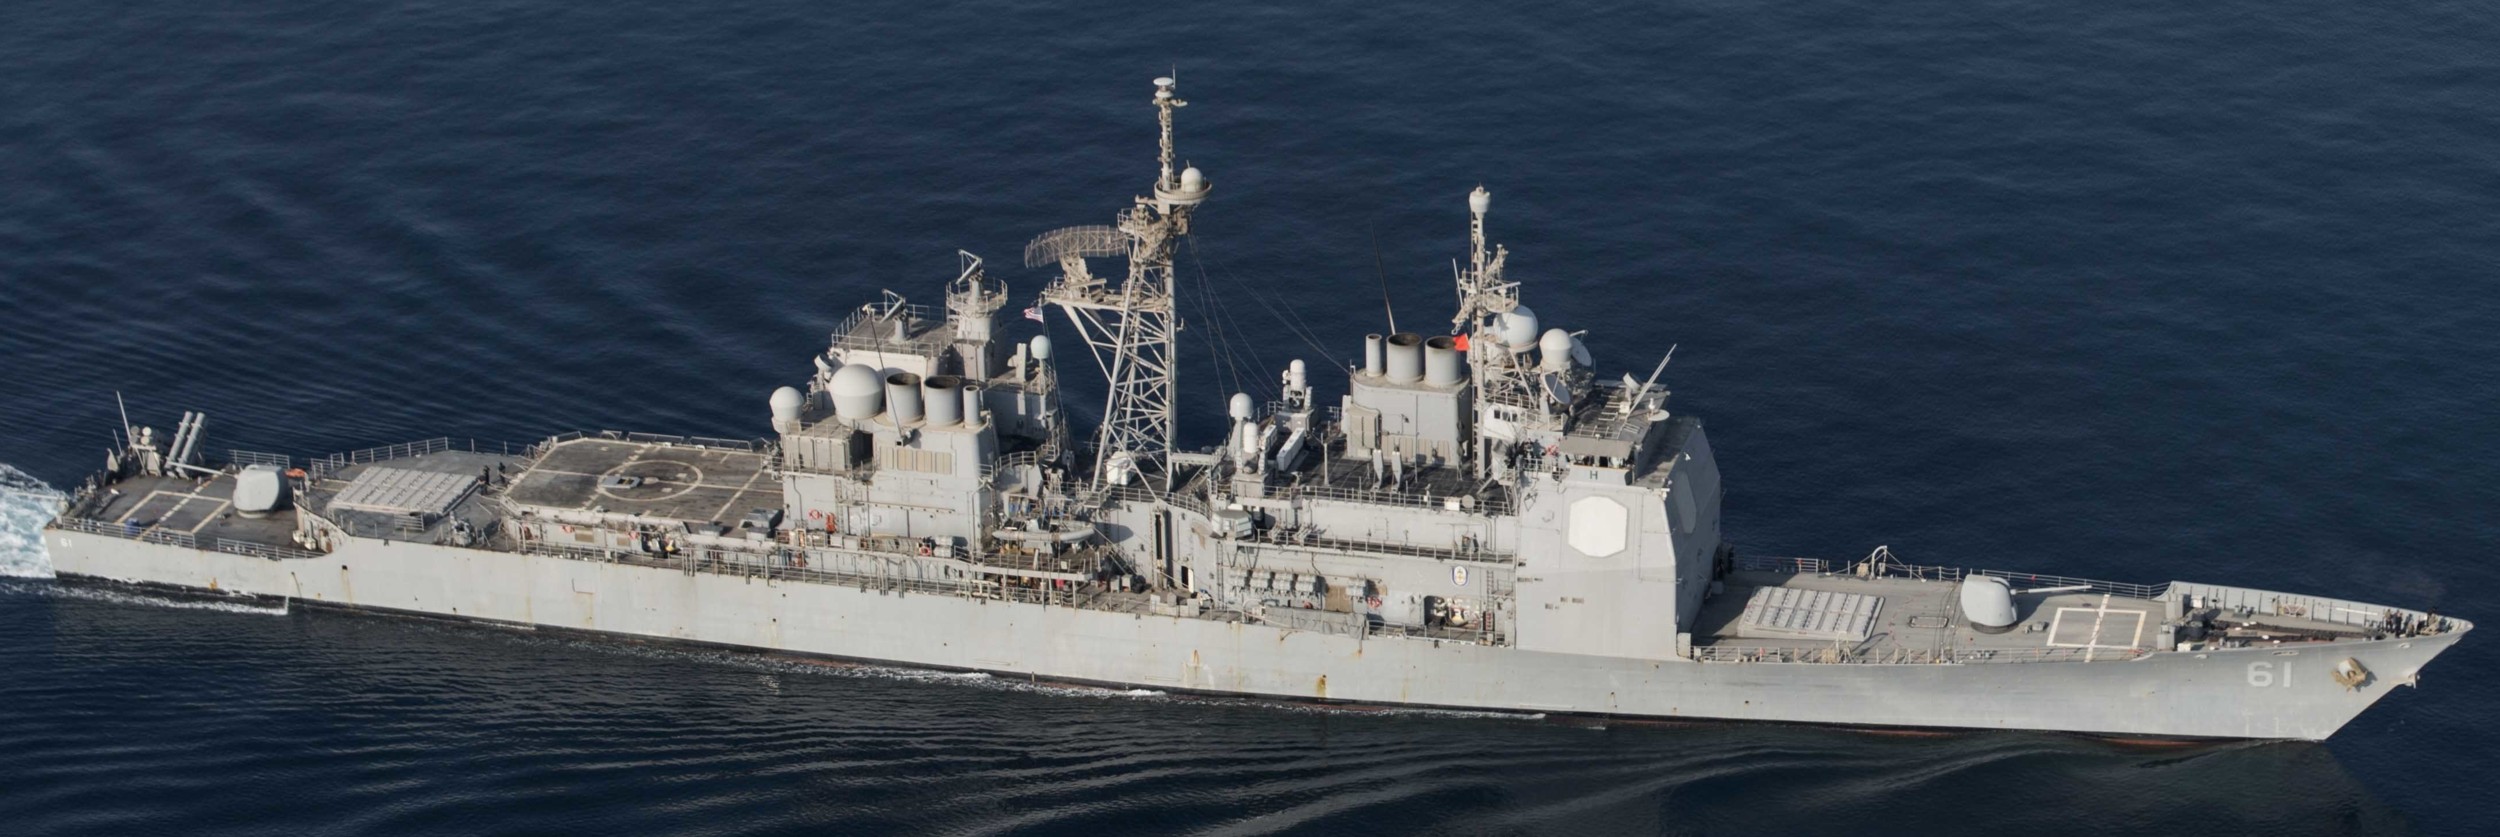 cg-61 uss monterey ticonderoga class guided missile cruiser aegis us navy 86